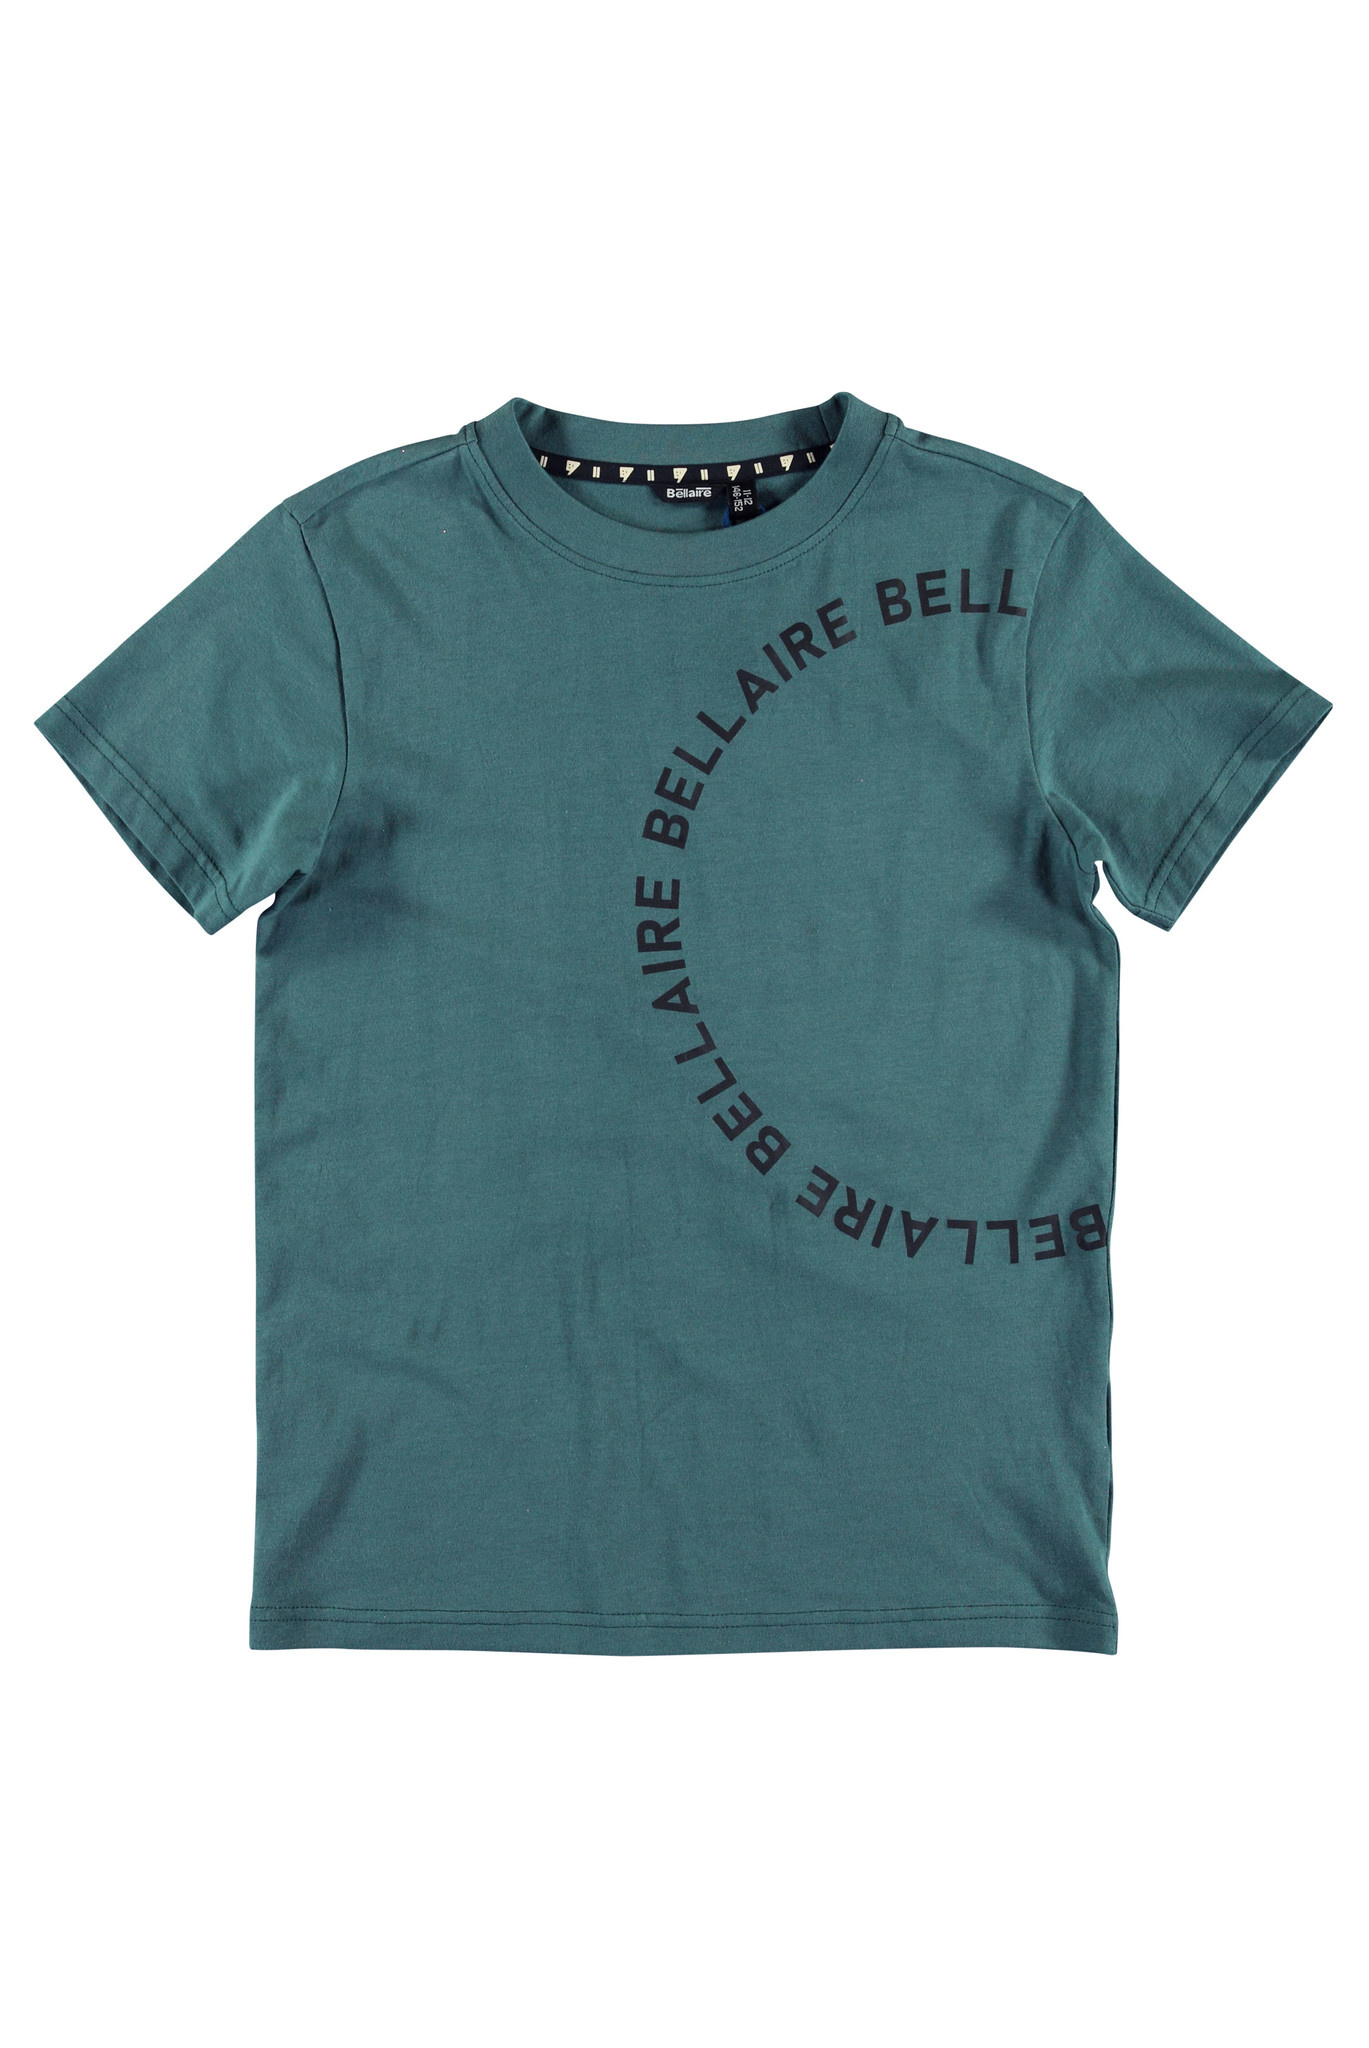 Bellaire Jongens t-shirt - Balsam